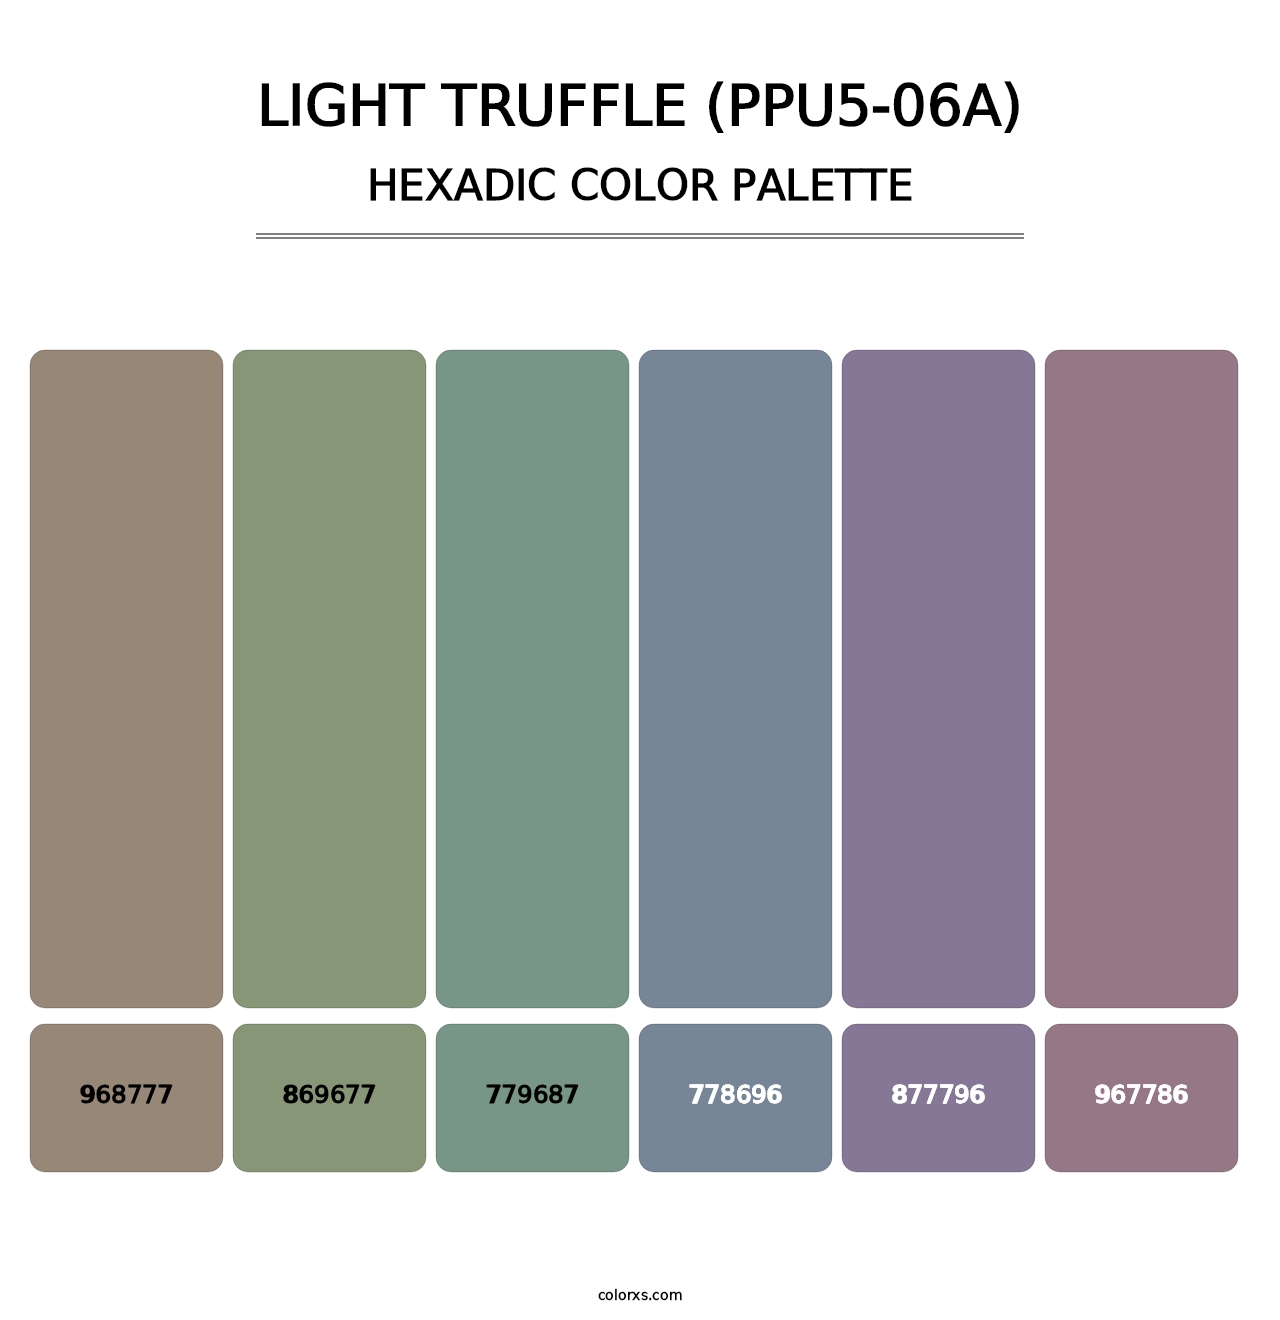 Light Truffle (PPU5-06A) - Hexadic Color Palette